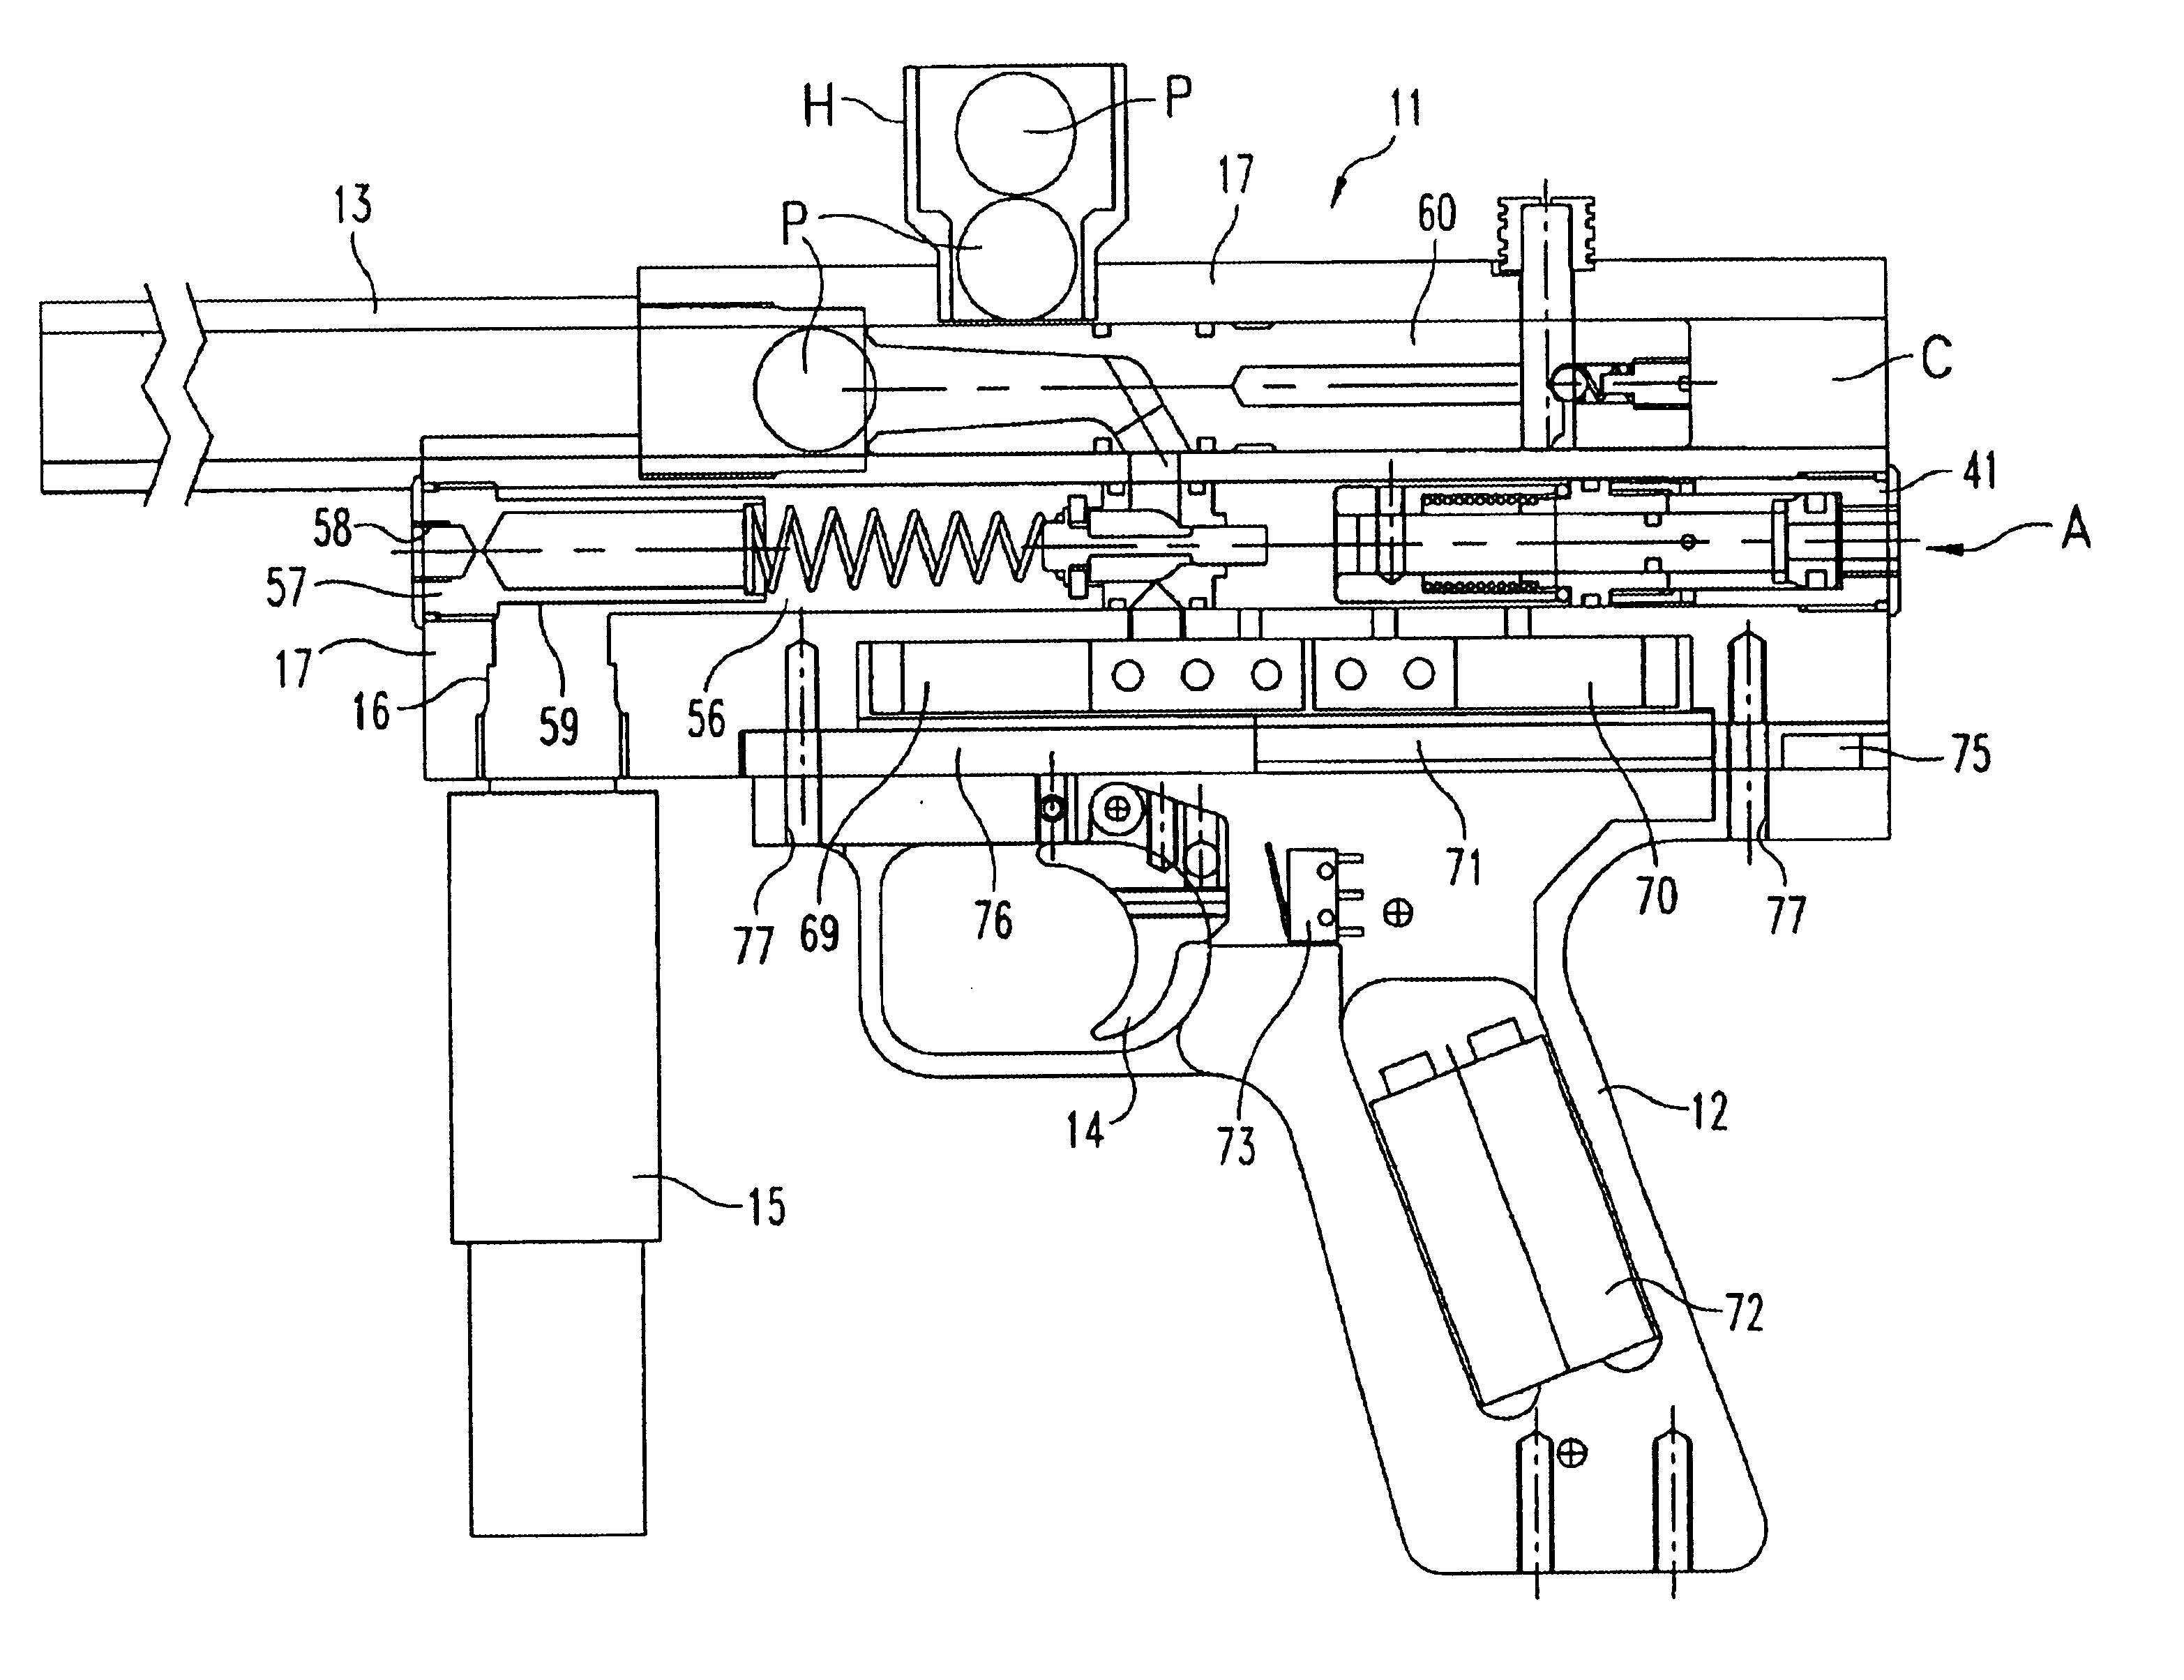 Electronic pneumatic paintball gun